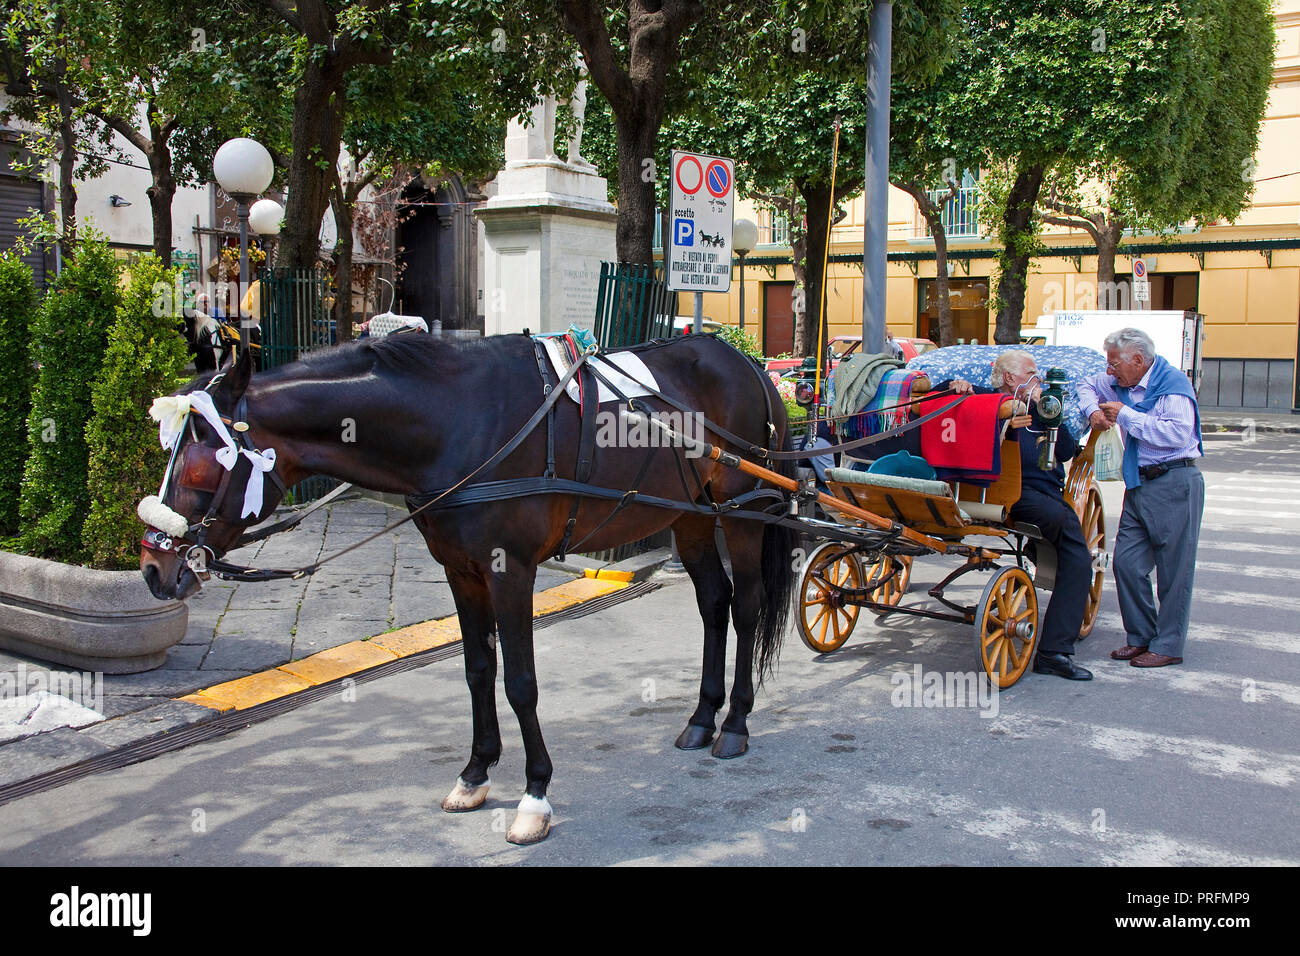 Horse-drawn carriage at Piazza Tasso, Sorrento, Peninsula of Sorrento, Gulf of Naples, Campania, Italy Stock Photo